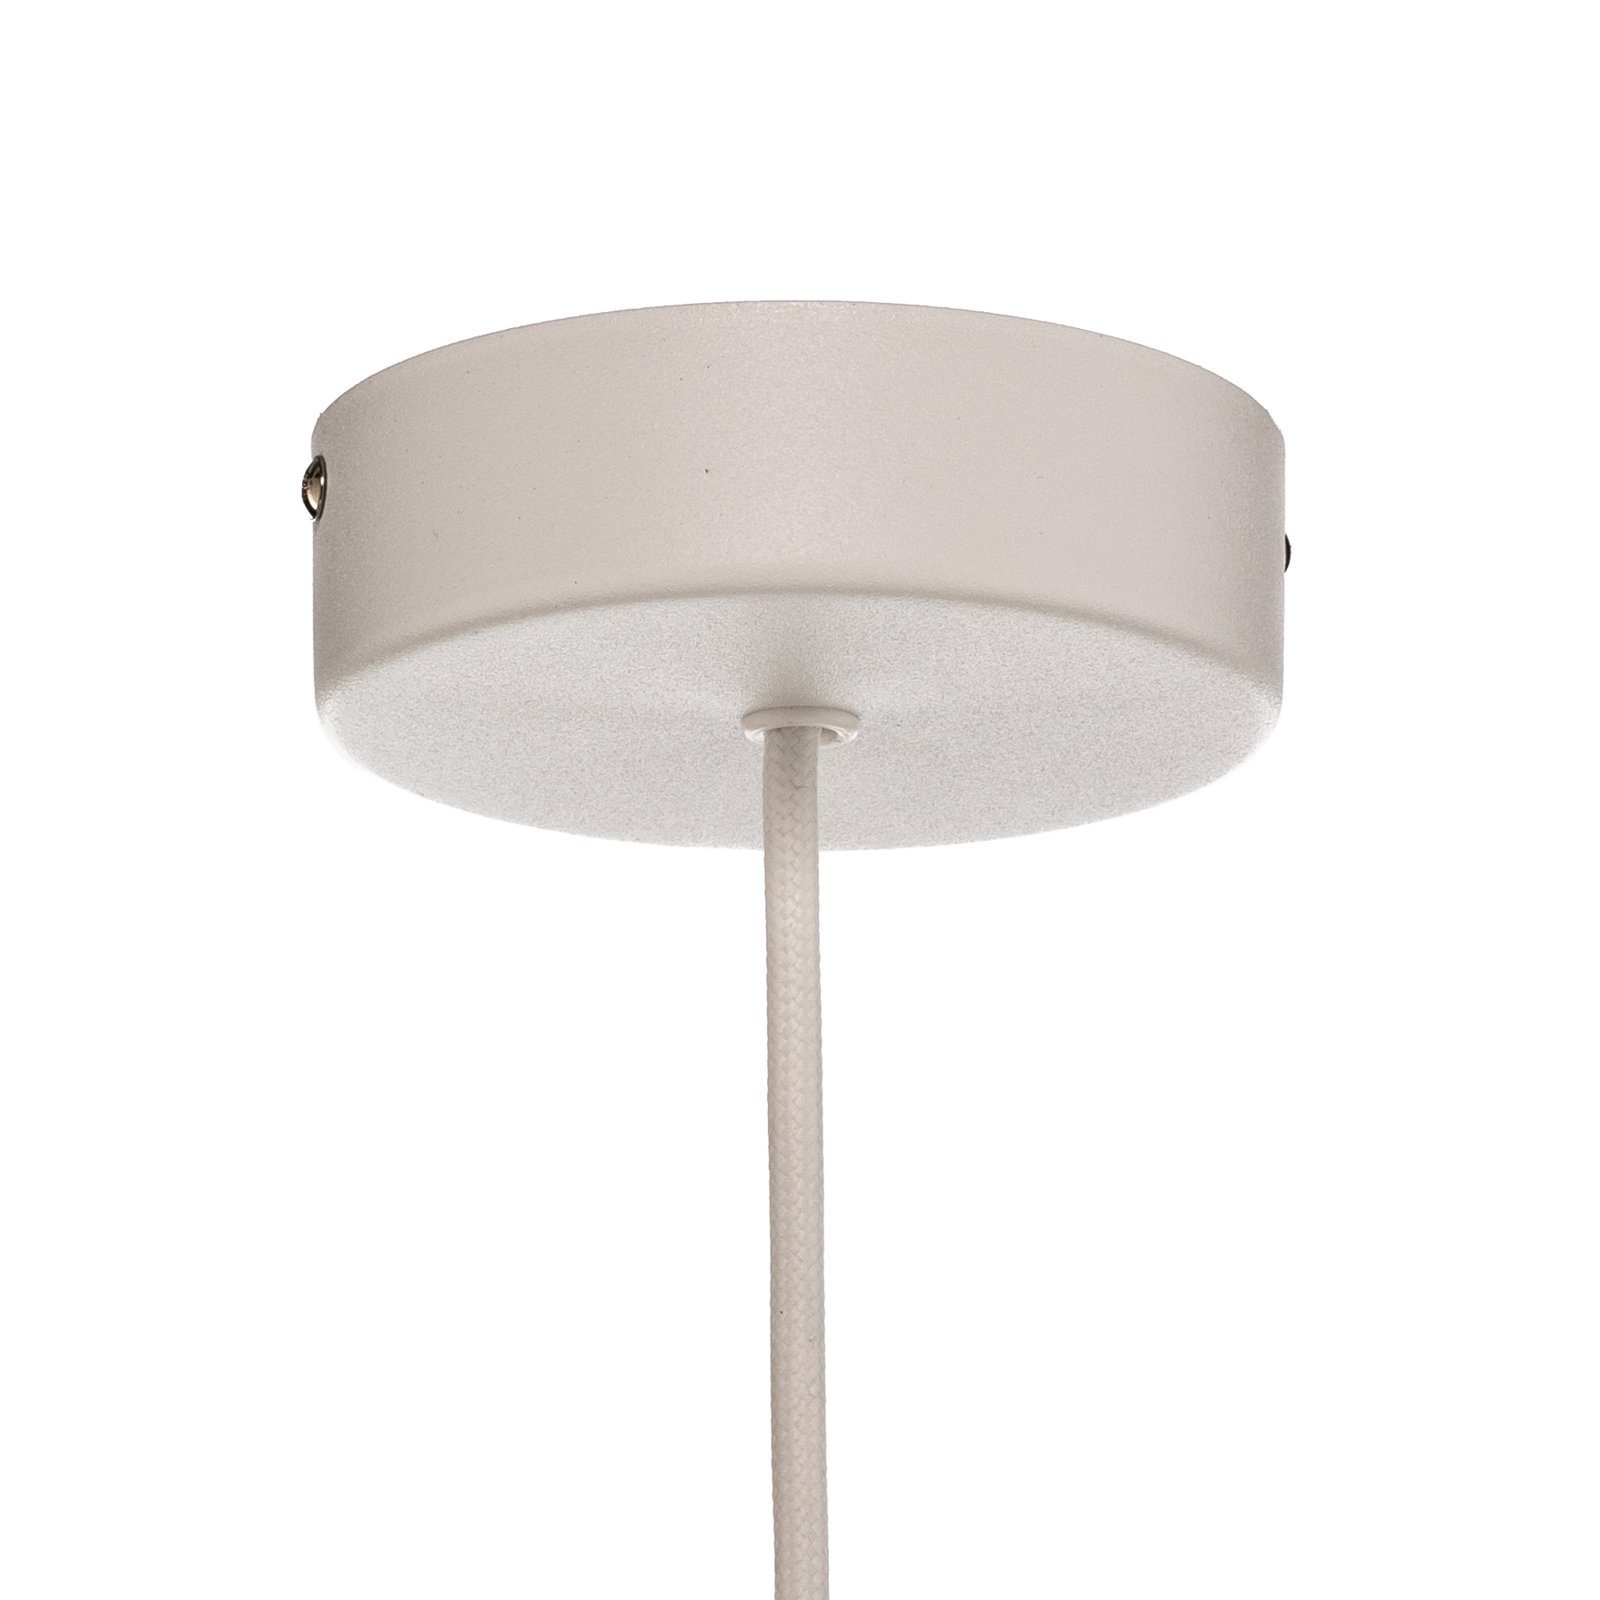 Metalowa lampa wisząca Egg M, Ø 38 cm, biała